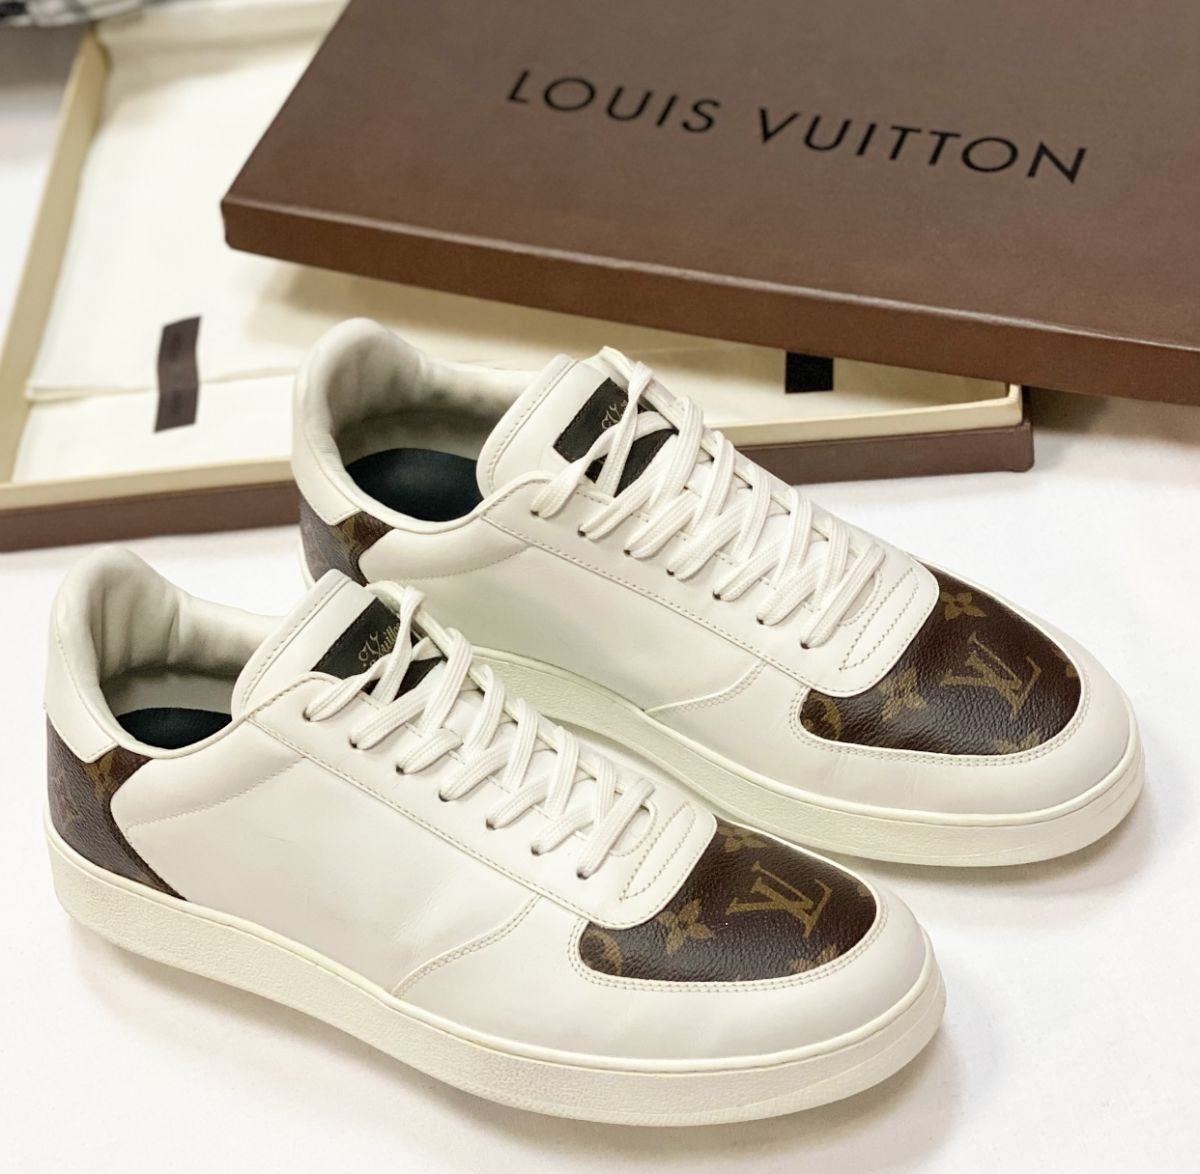 Кеды Louis Vuitton размер 41 цена 30 770 руб 